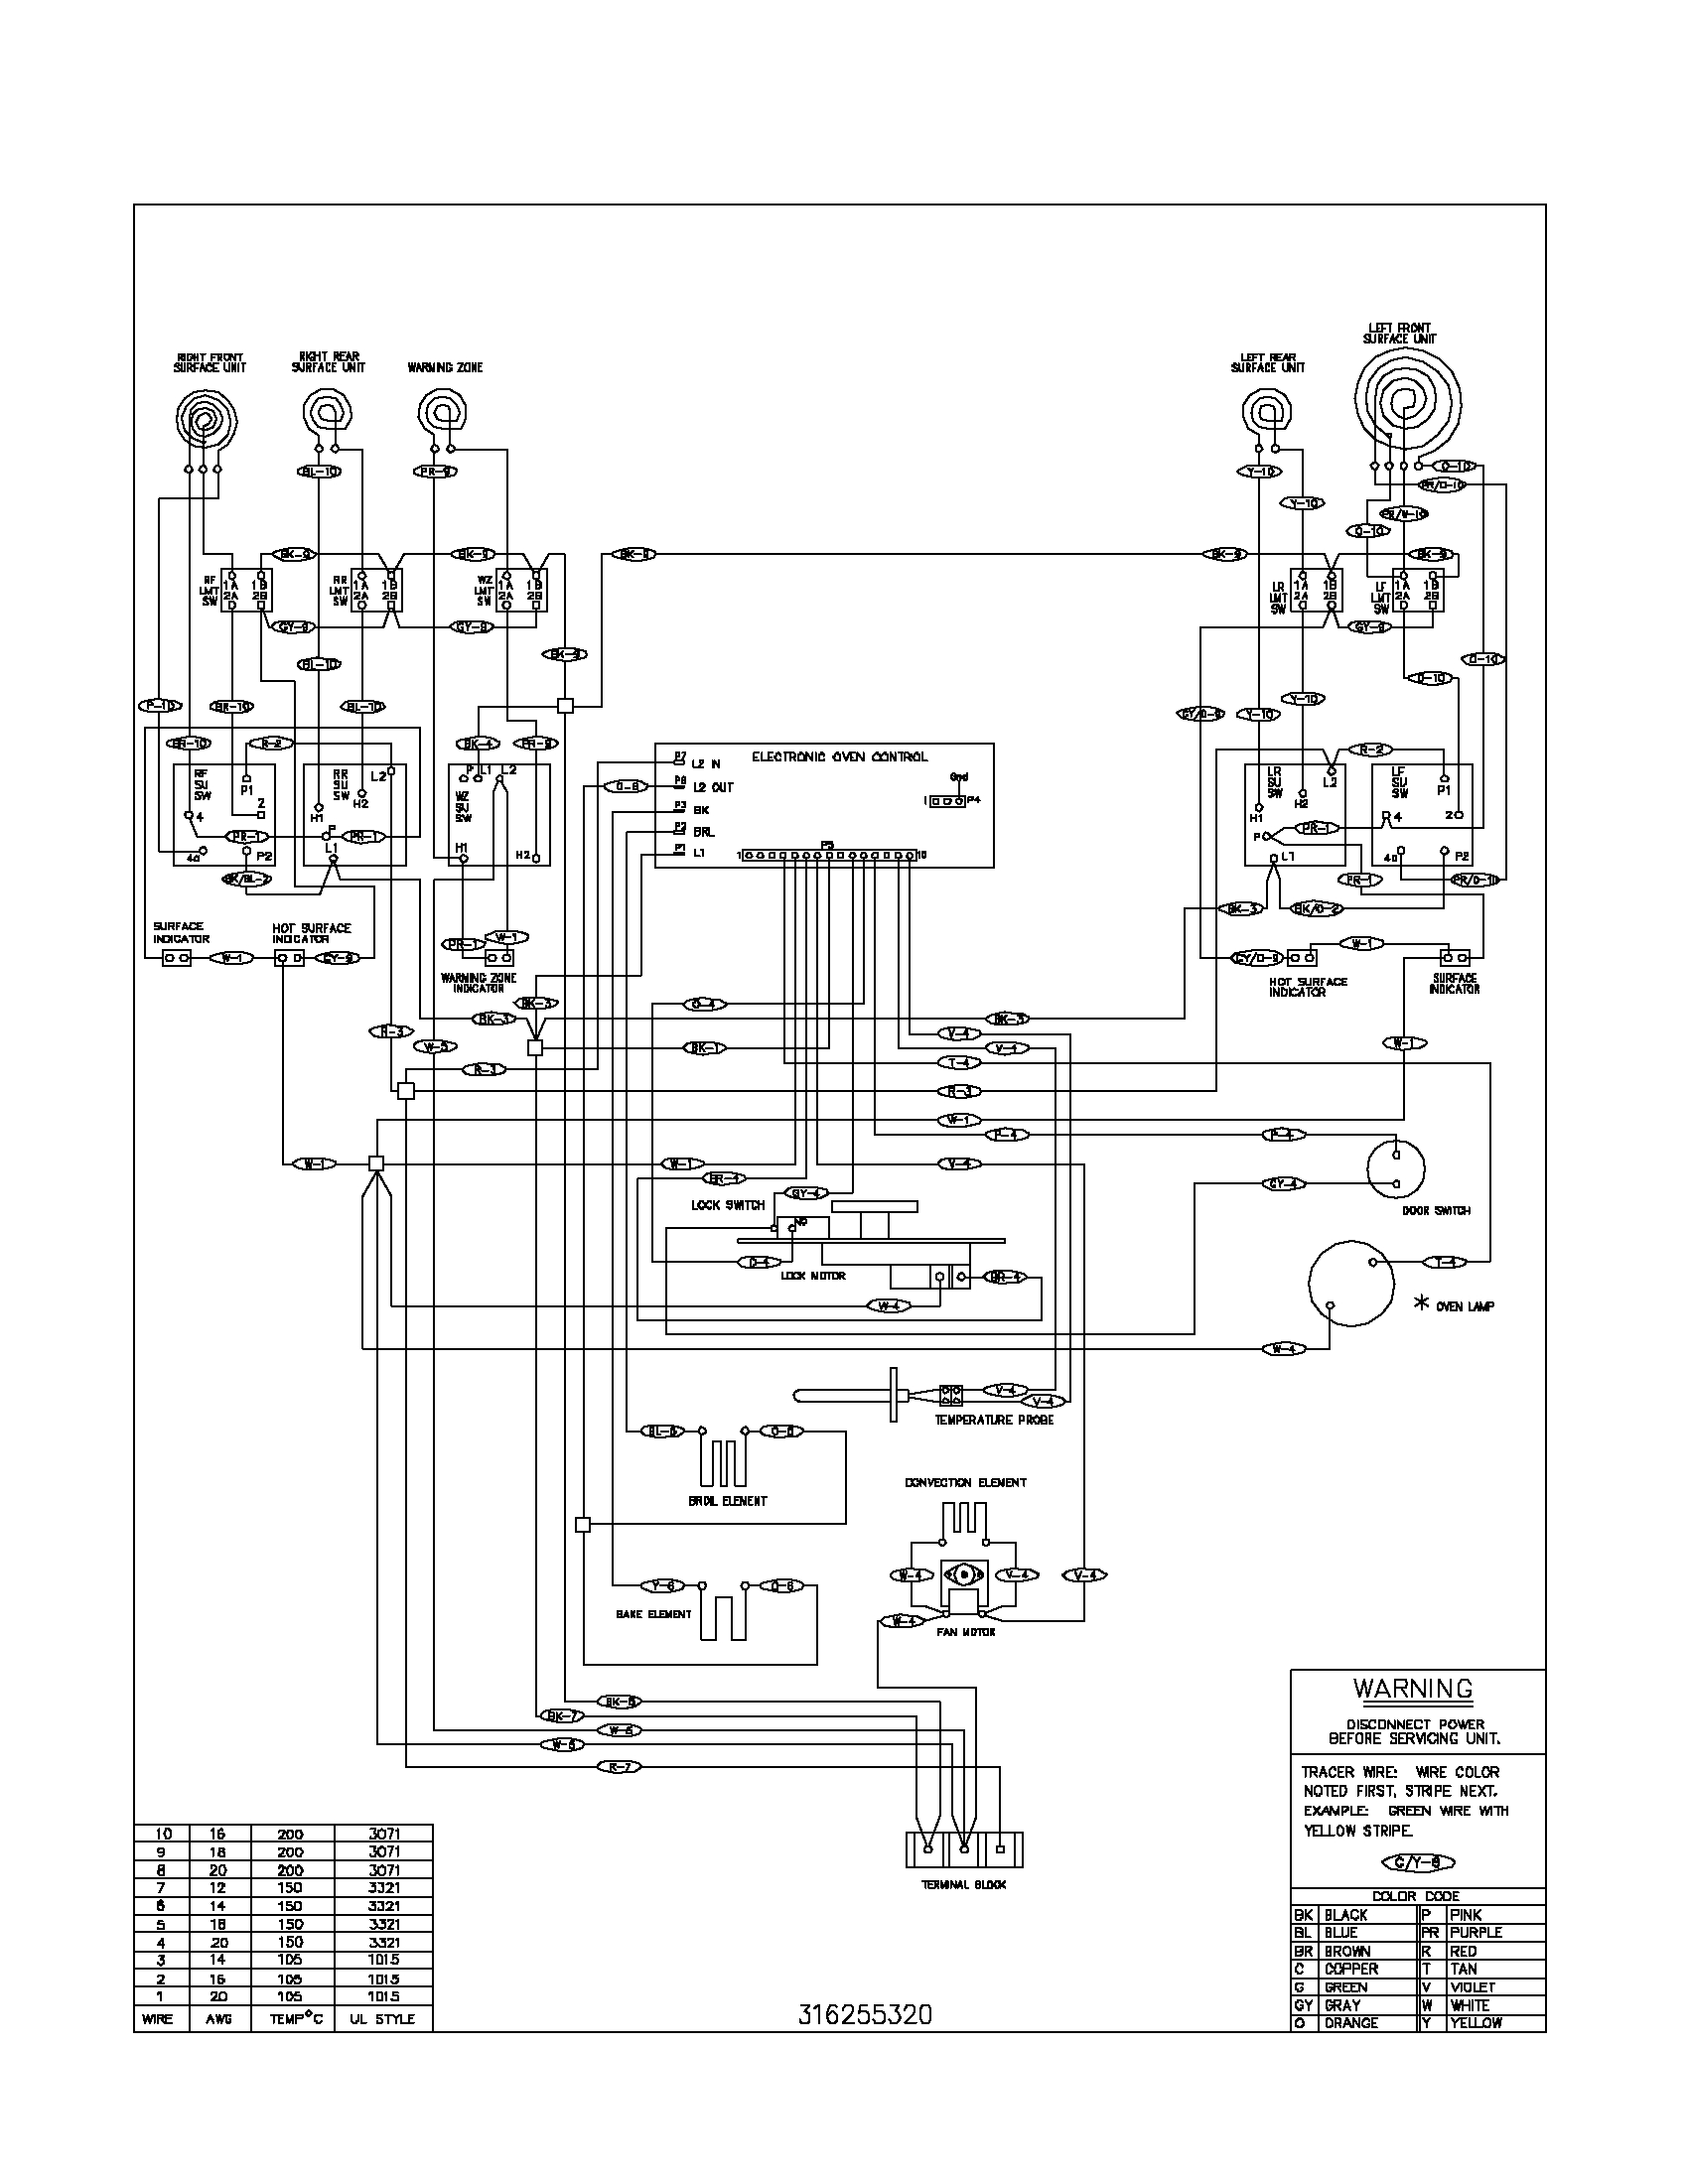 Whirlpool Refrigerator Parts Diagram Wiring On Ice Maker Parts Diagram Besides Wiring Of Refrigerator